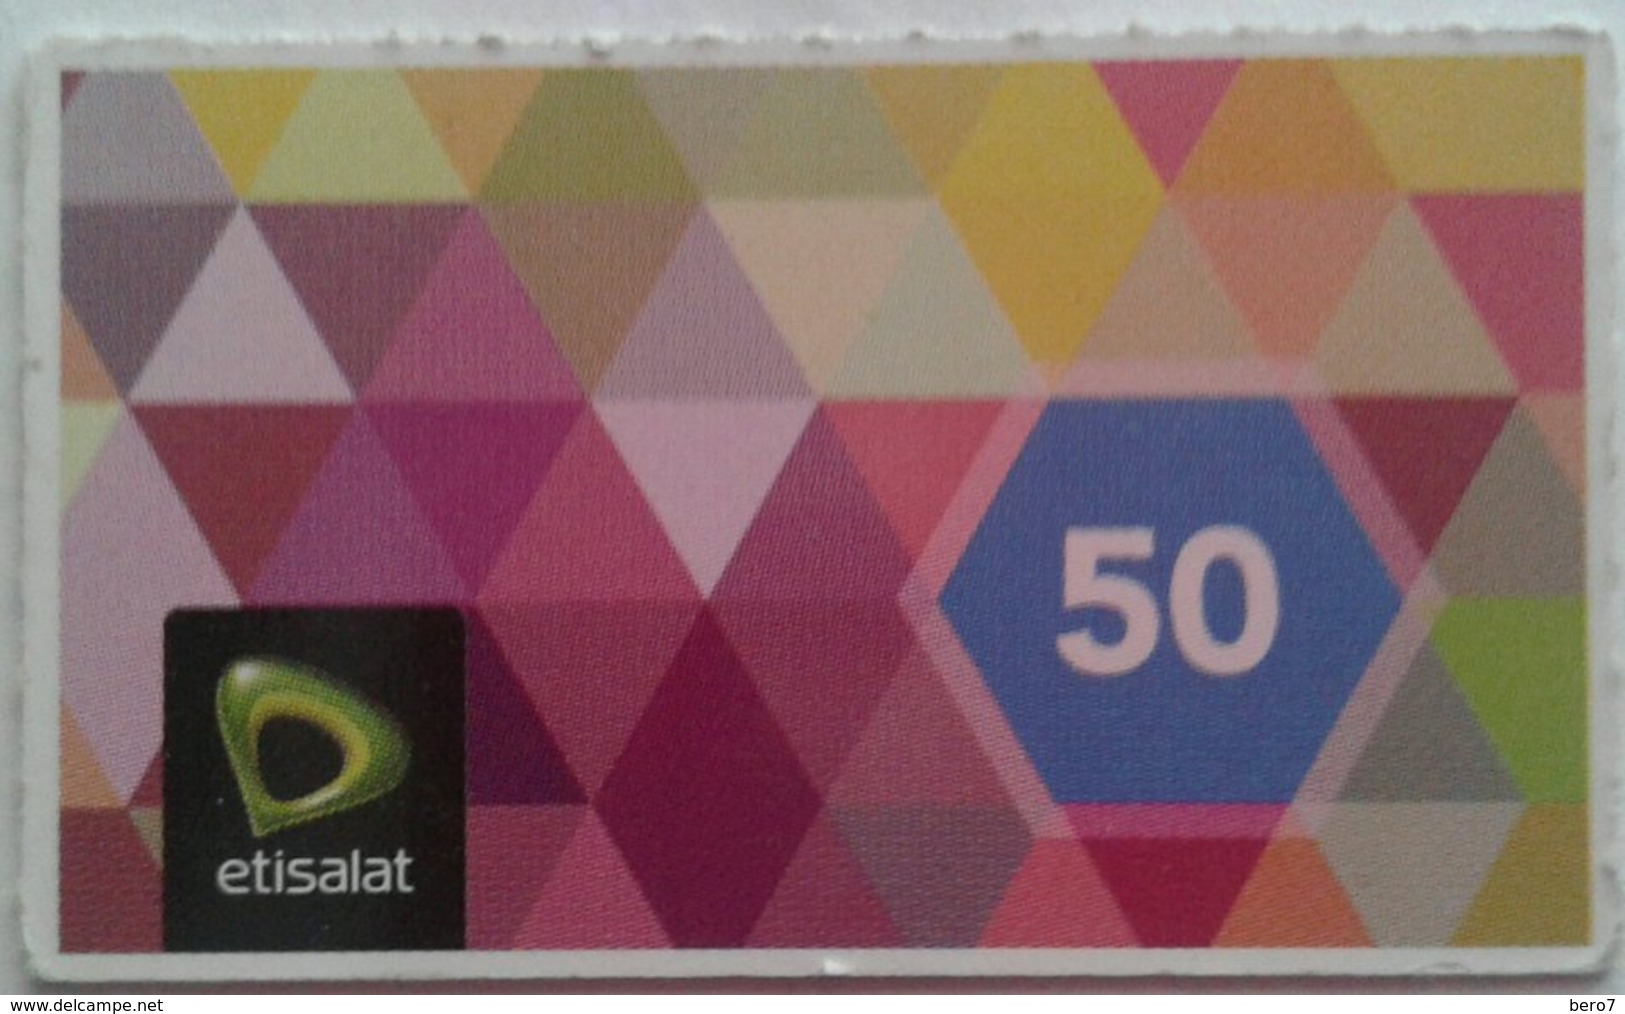 Egypt - Etisalat Small Size Phone Card "USED" 50 LE   (Egypte) (Egitto) (Ägypten) (Egipto) (Egypten) Afric - Egypt